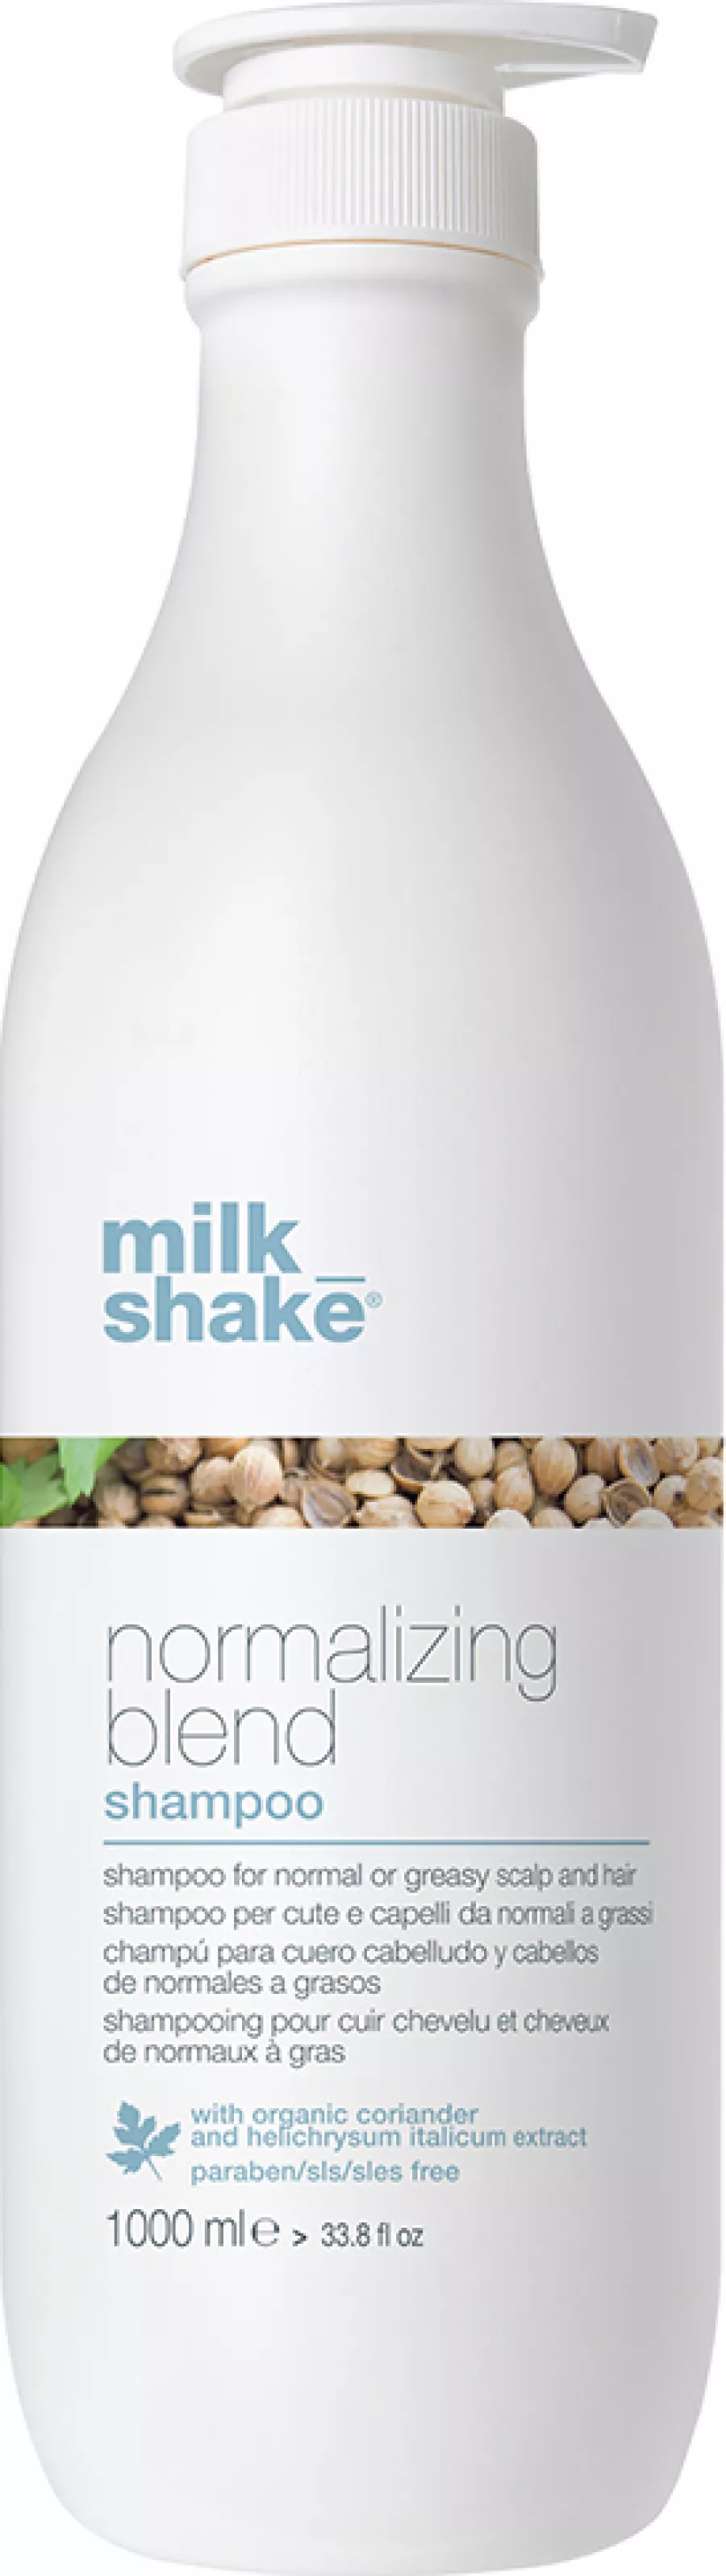 Milkshake normalizing blend shampoo 1 Litre